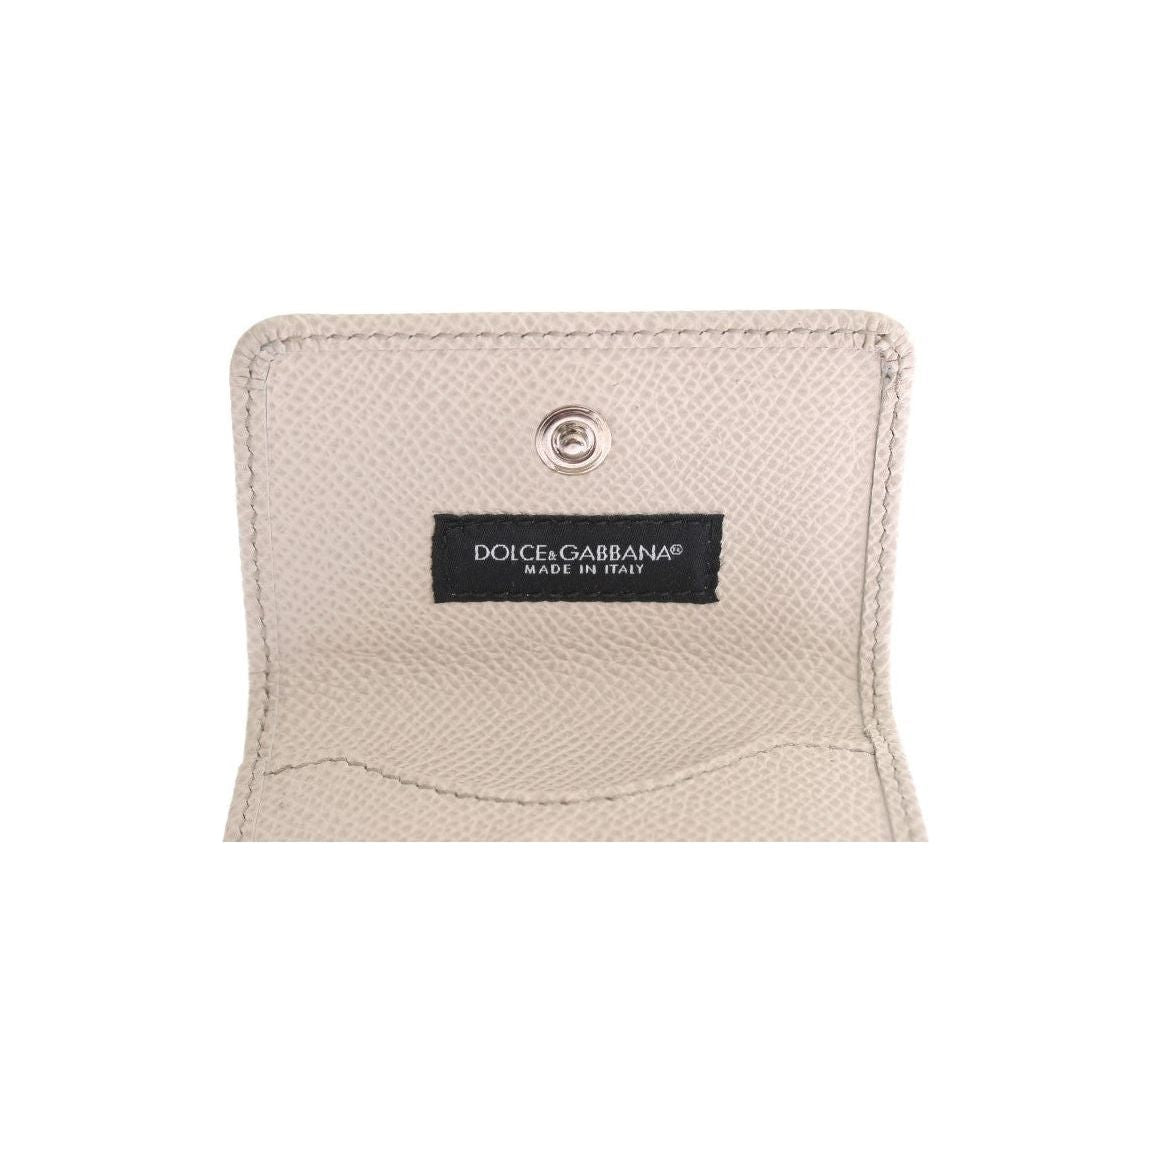 Dolce & Gabbana Sleek White Leather Condom Case Wallet white-dauphine-leather-case-wallet Wallet 518018-white-dauphine-leather-case-wallet-6.jpg